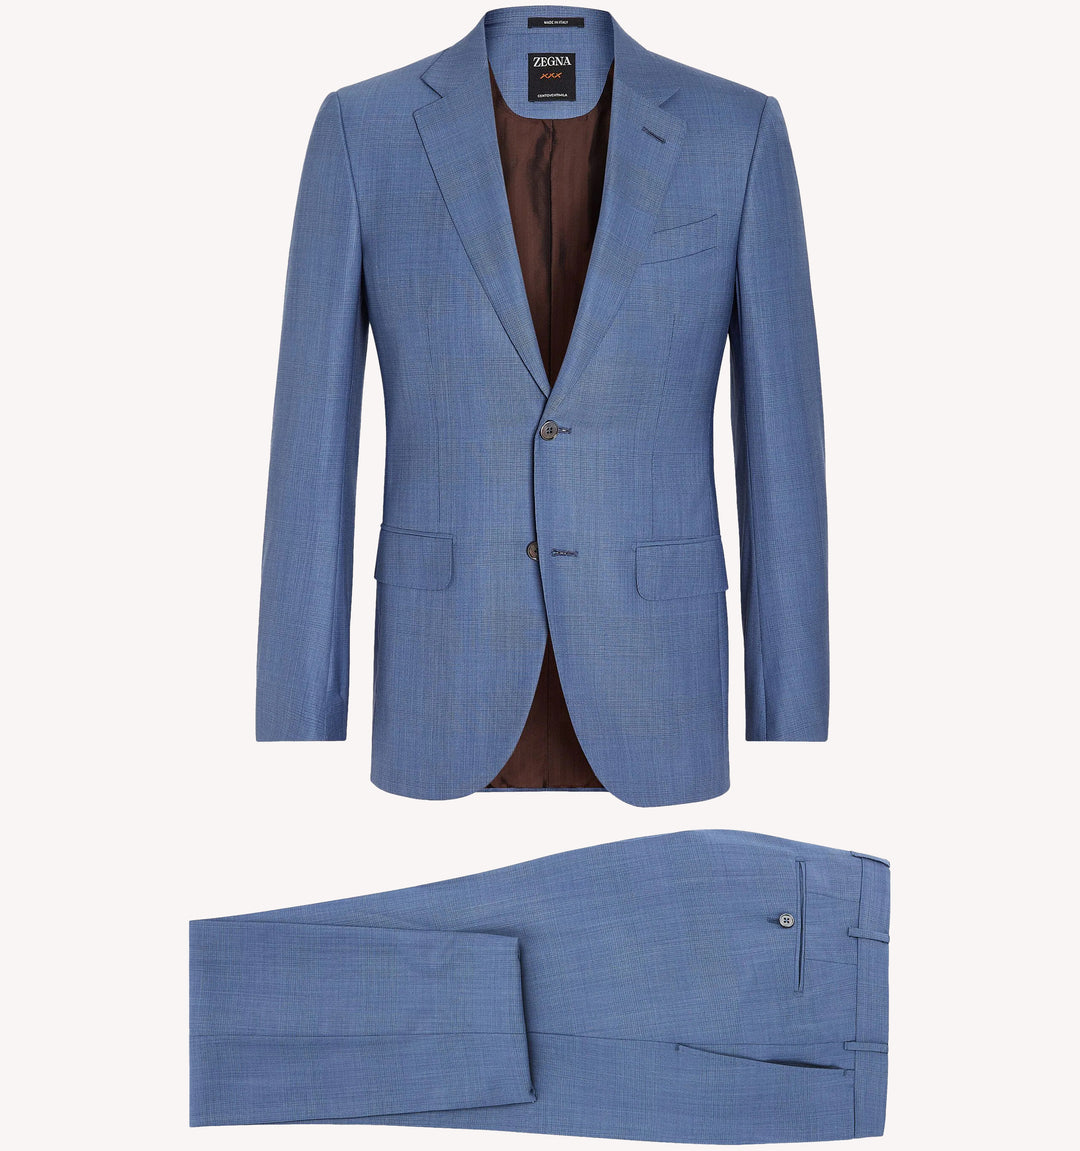 Zegna Plaid Check Suit in Blue